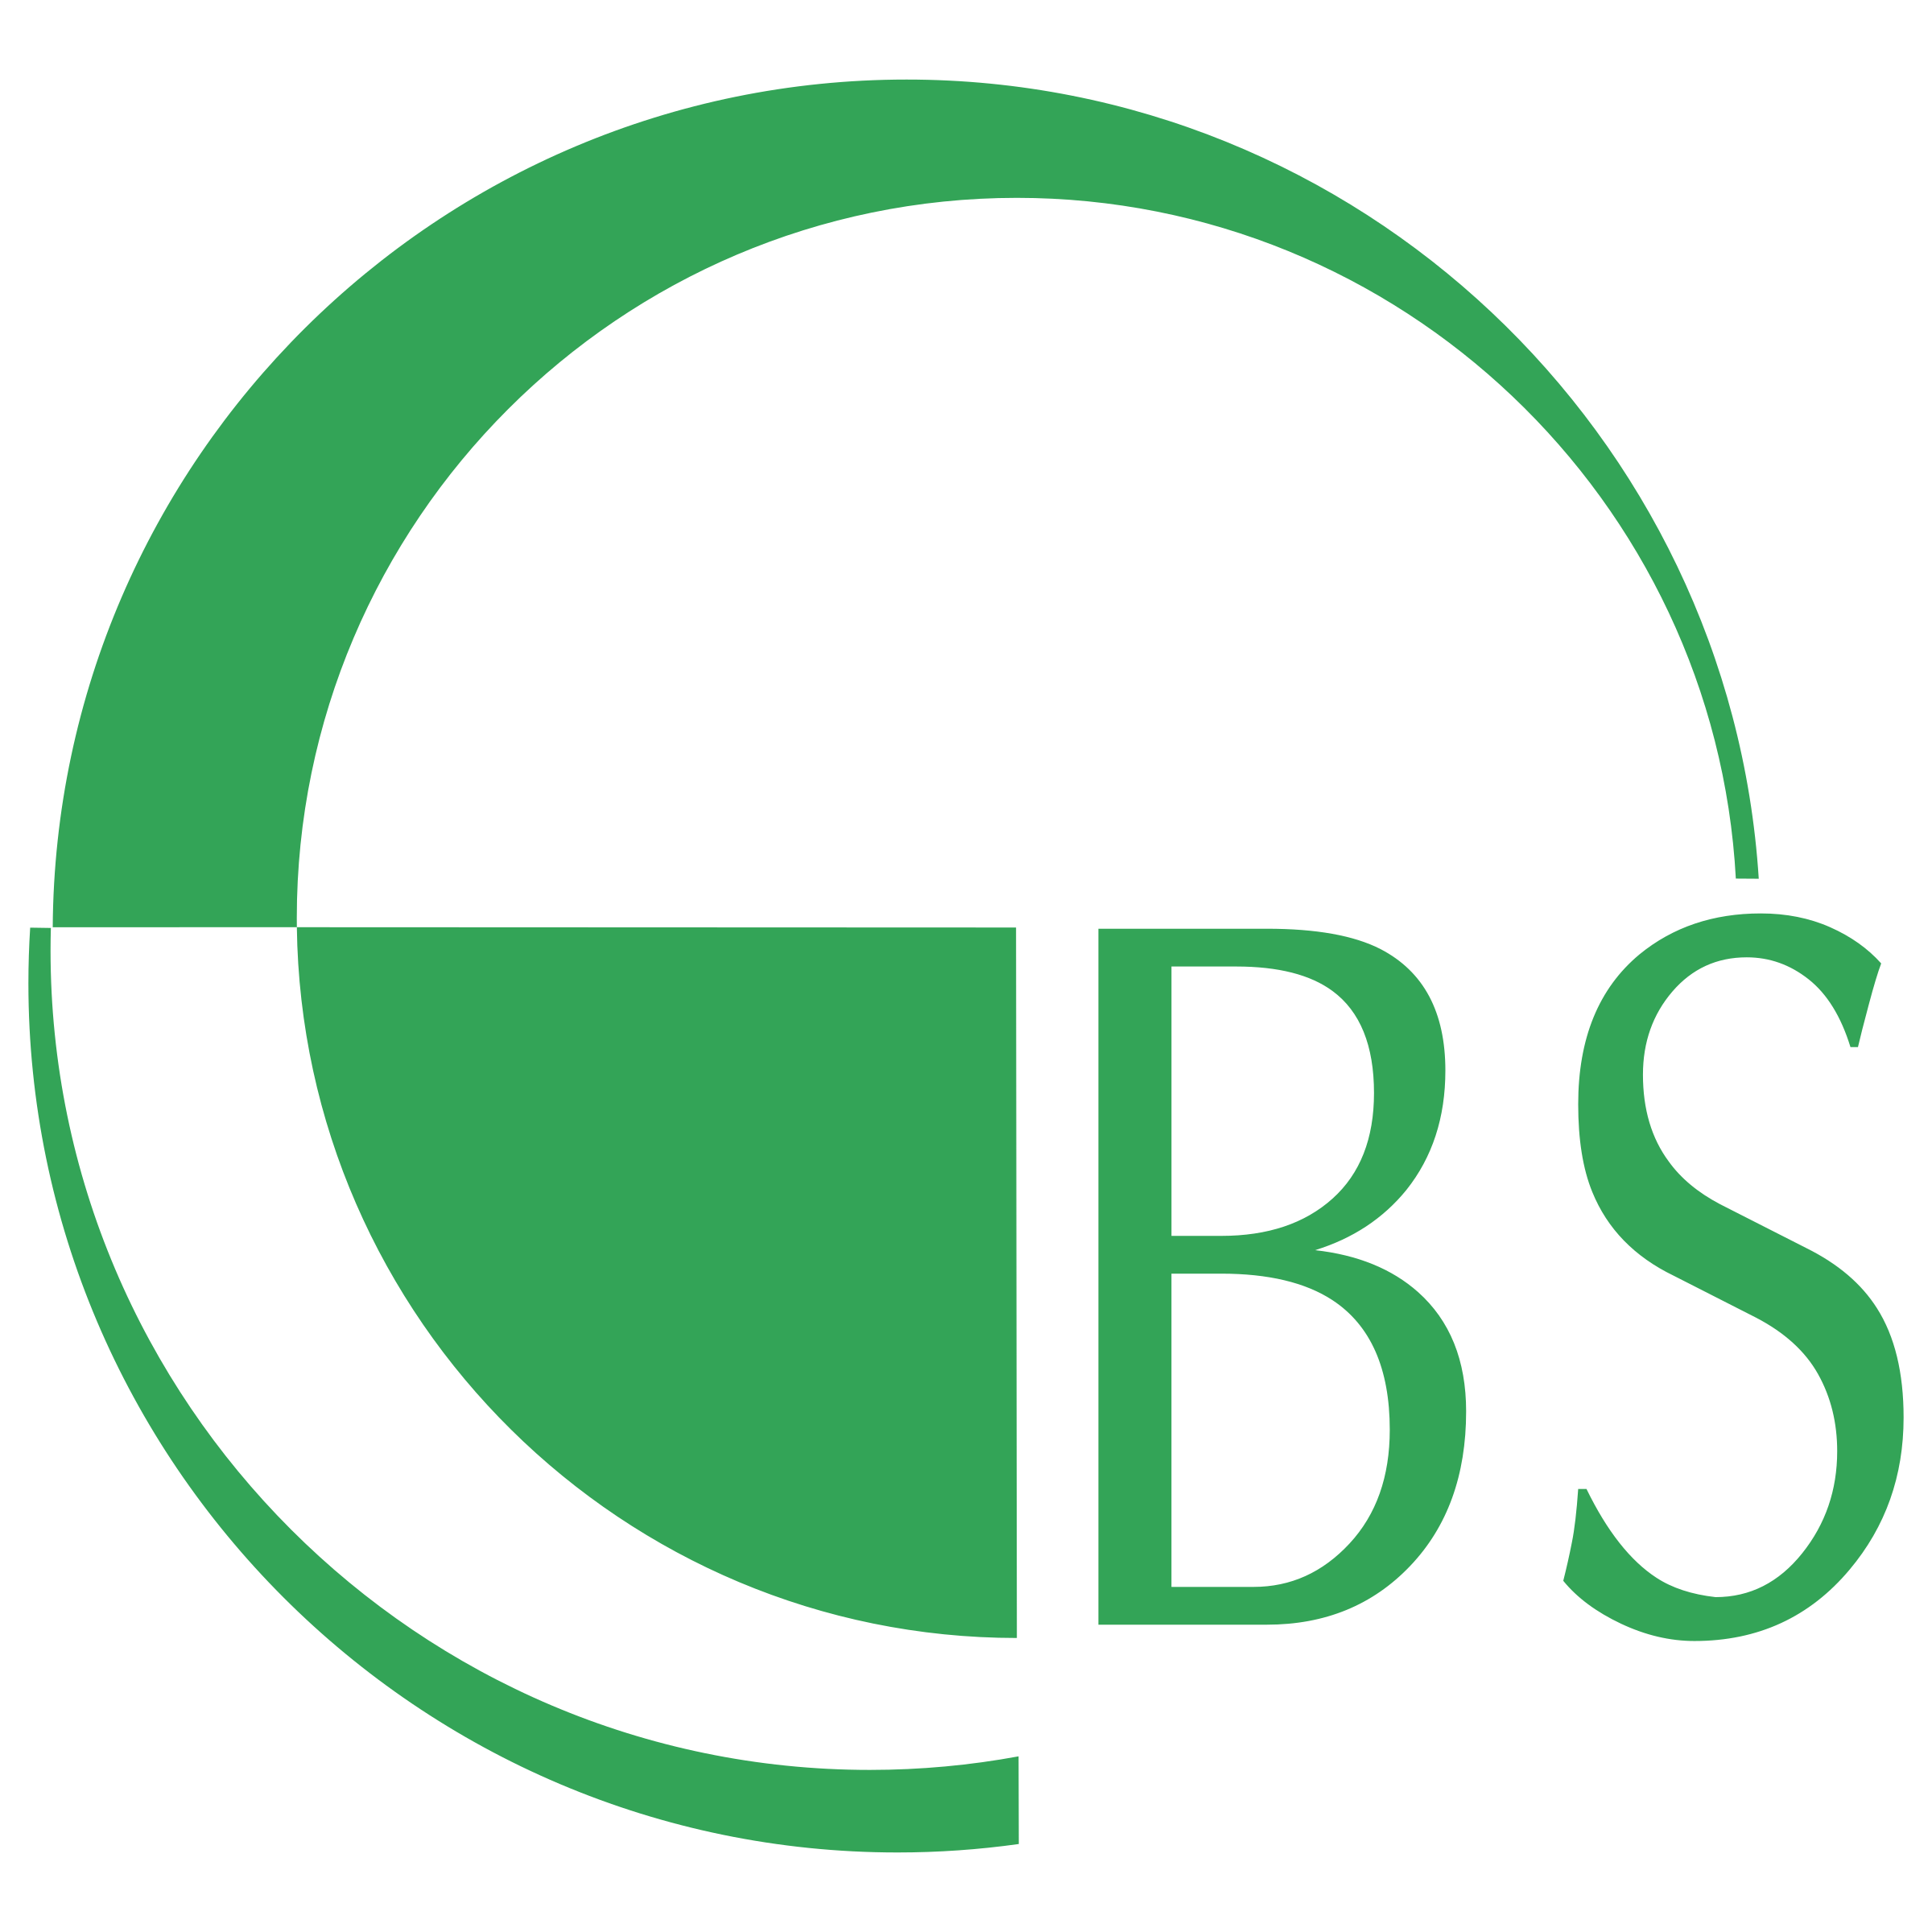 Bs Logo - BS Logo PNG Transparent & SVG Vector - Freebie Supply